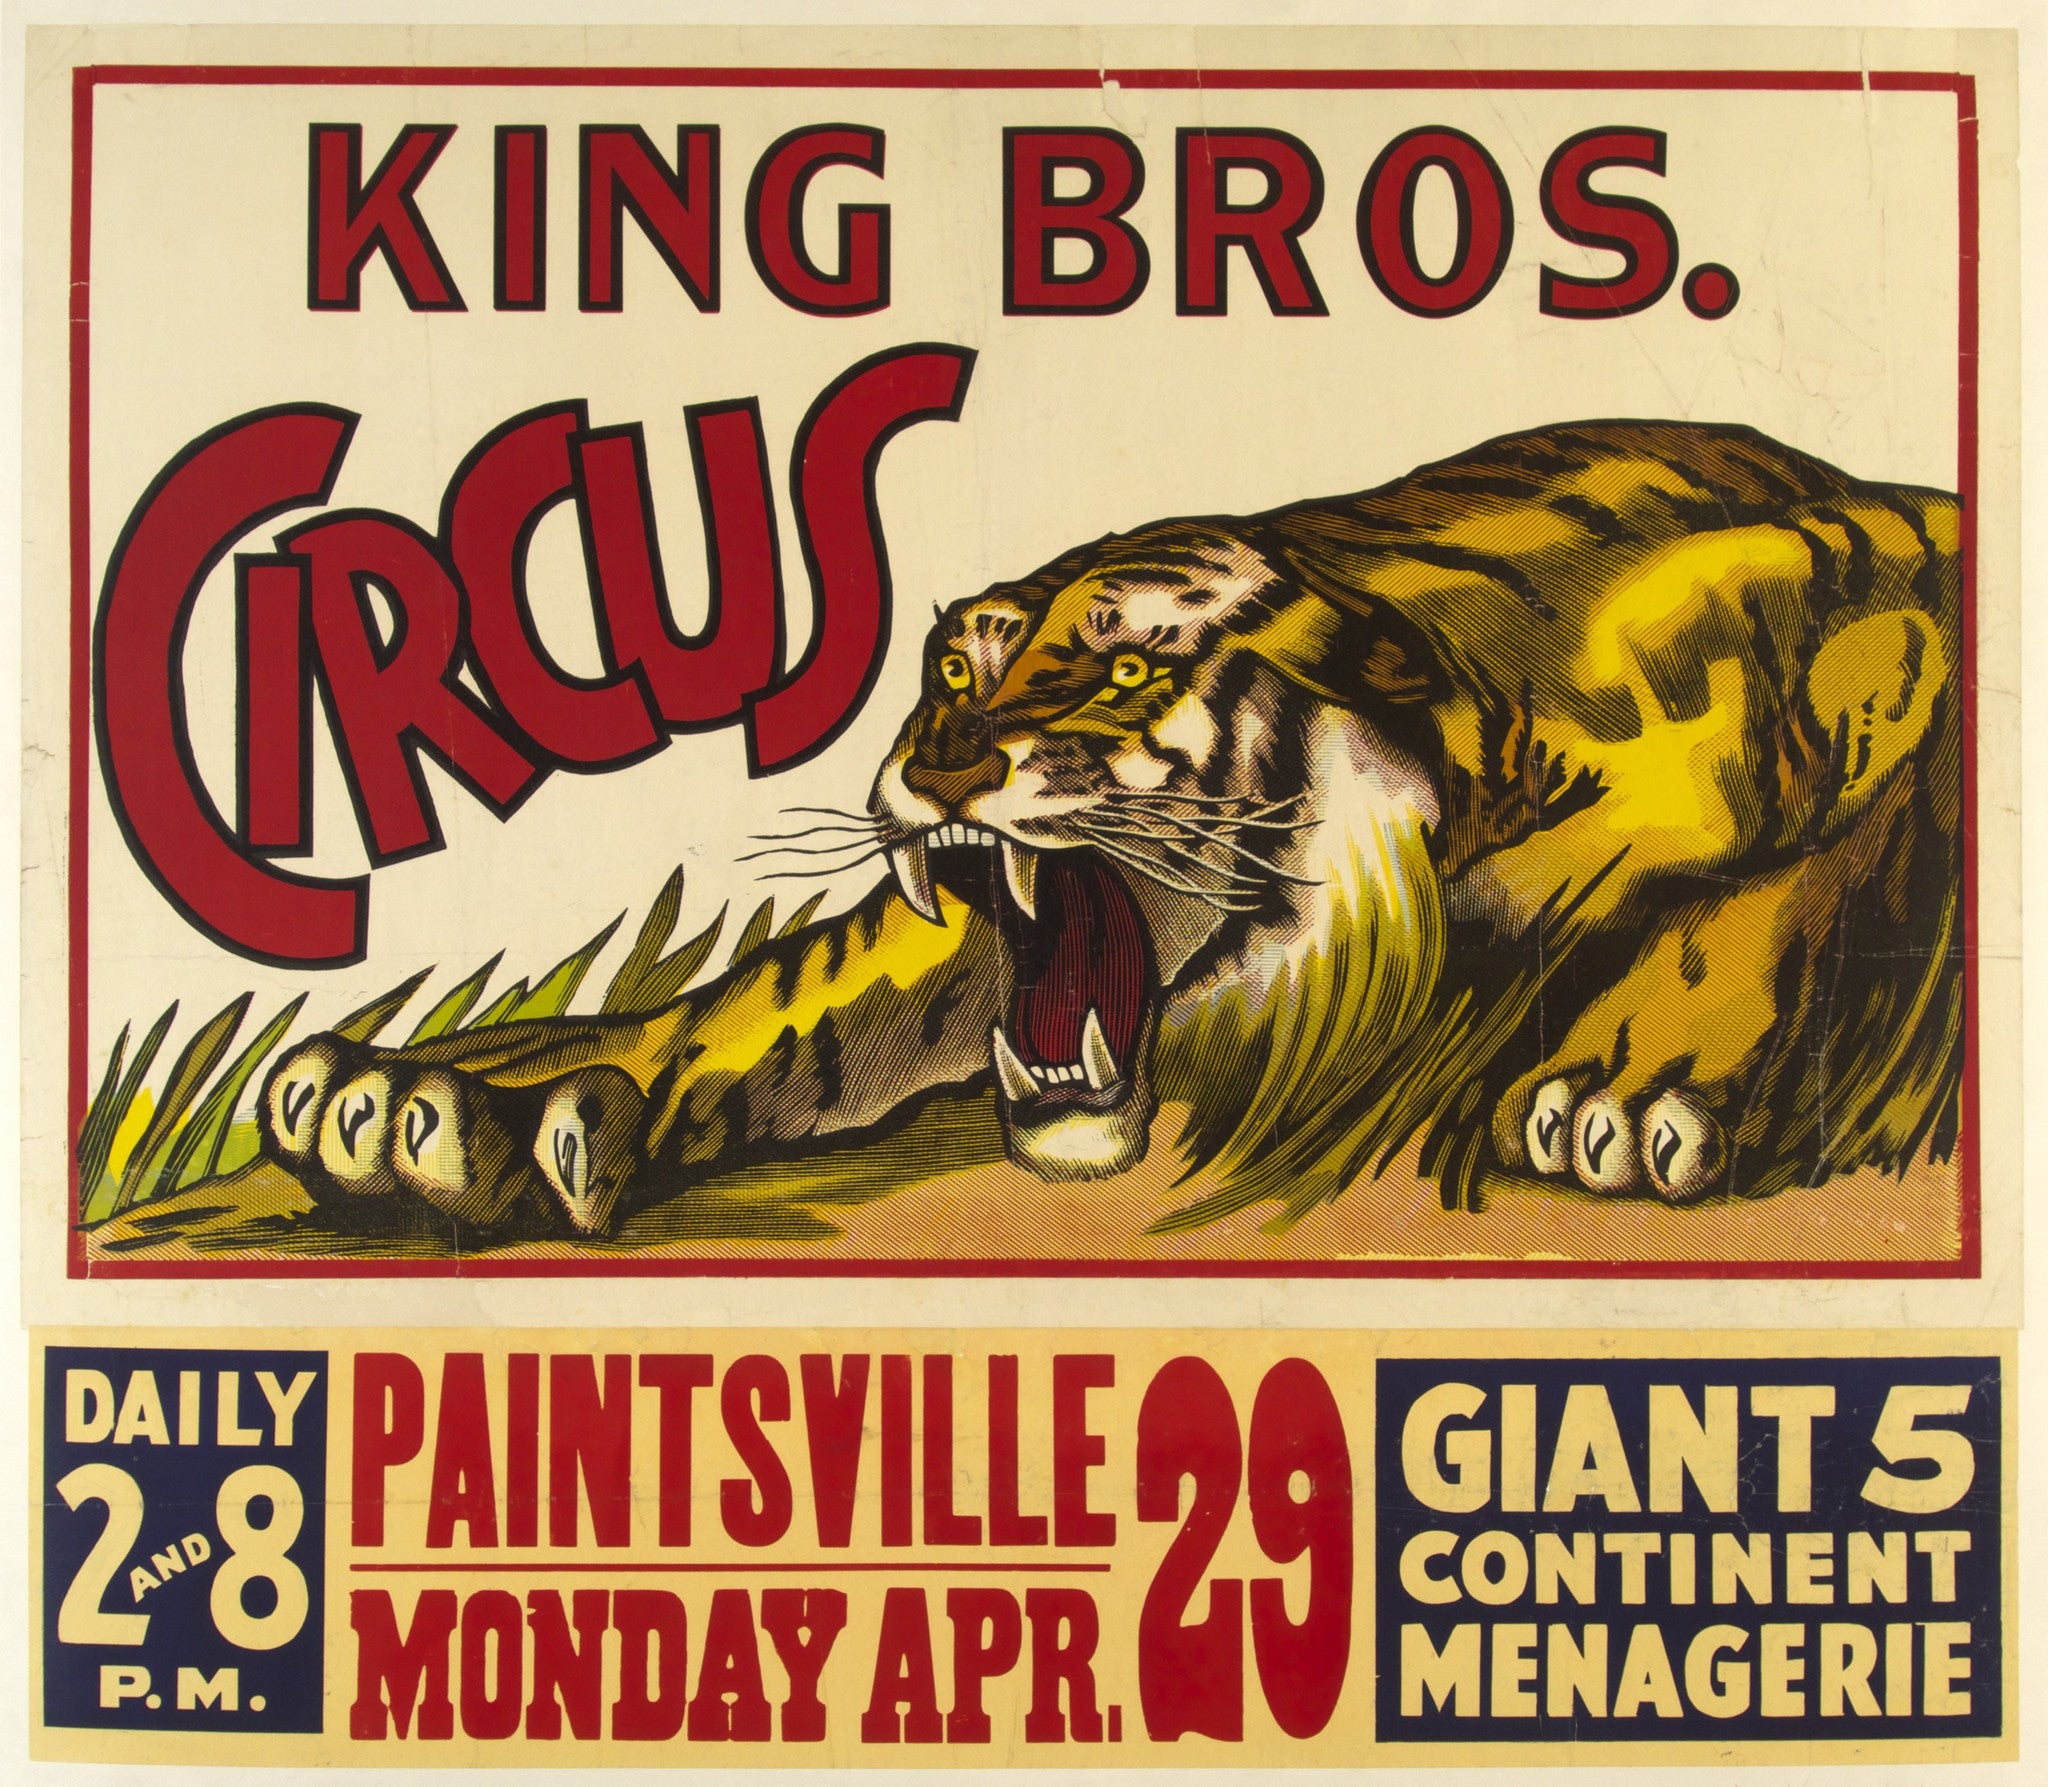 circus tiger posters